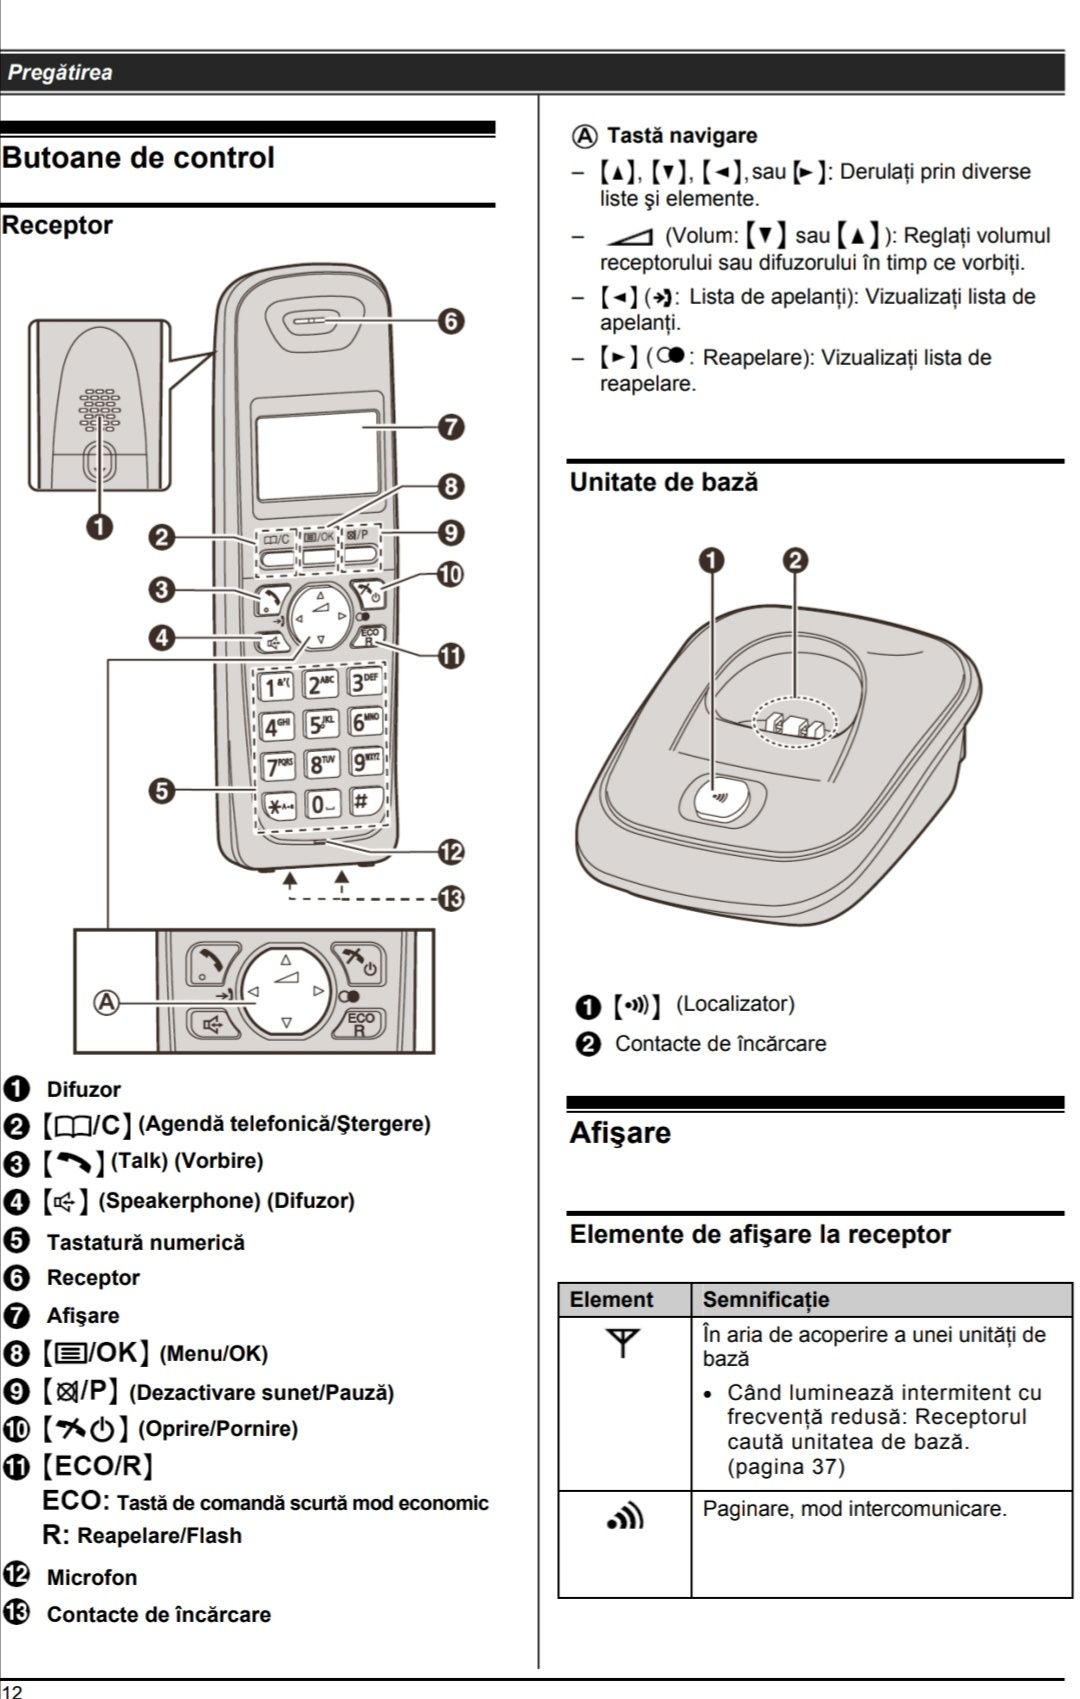 Vând telefon fără fir (cordless) Panasonic model KX-TG2511FX